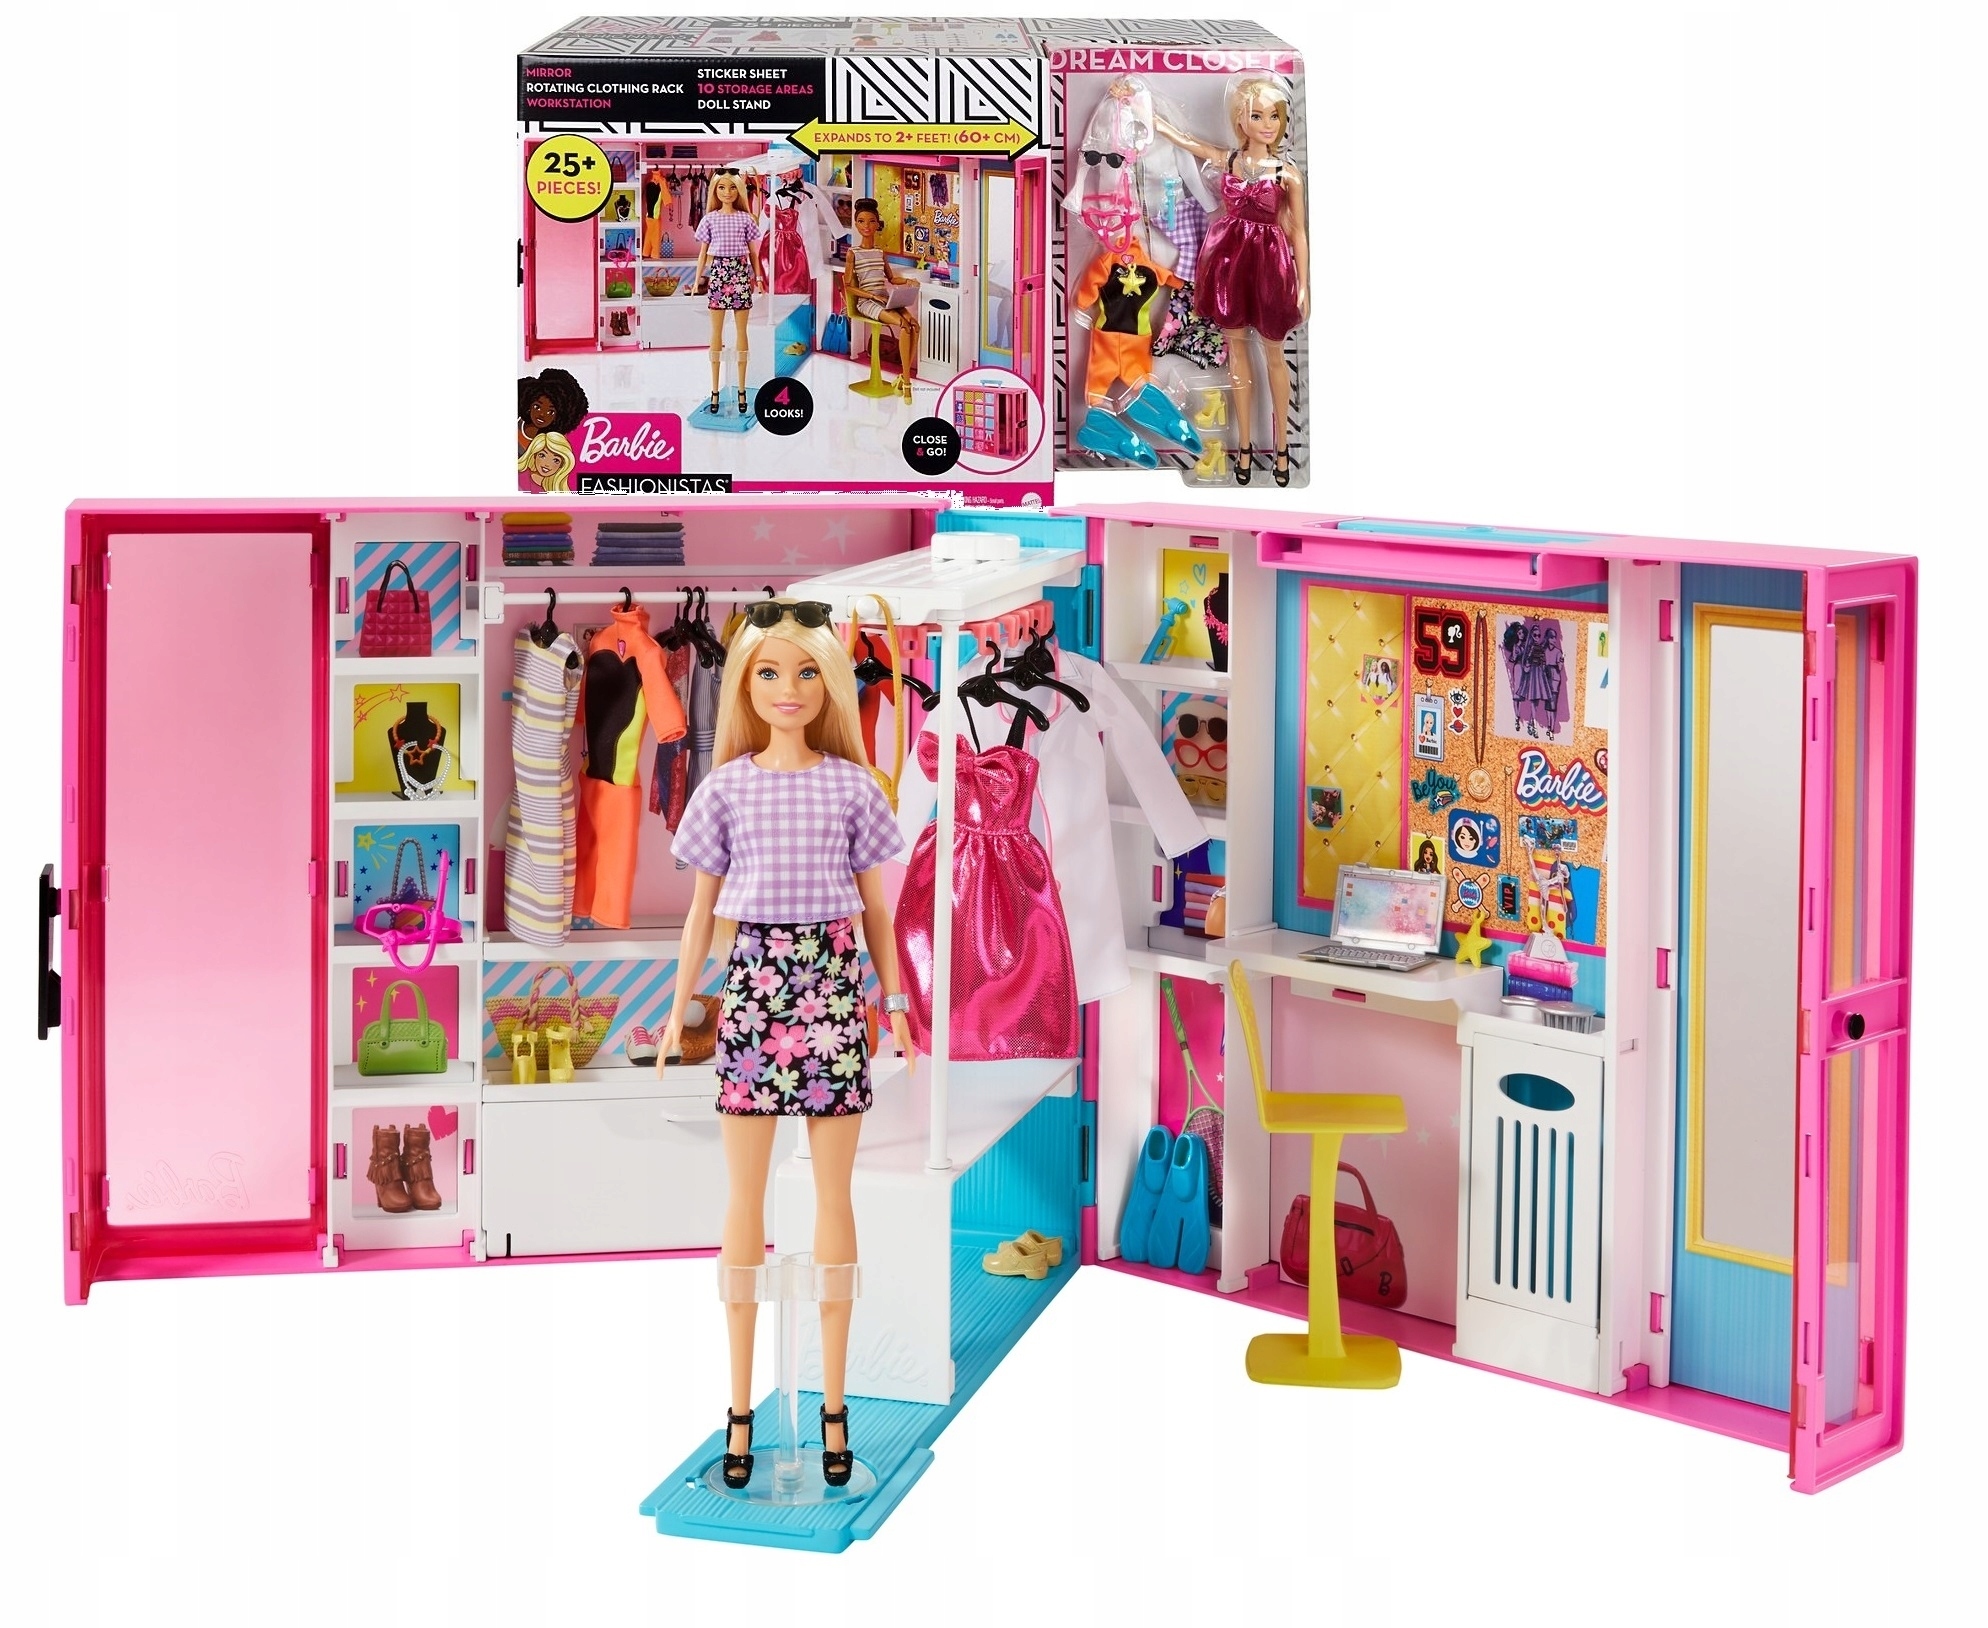 Гардероб барби. Игрушки куклы Барби. Шкаф для кукол Барби. Шкаф для Барби с одеждой и аксессуарами.